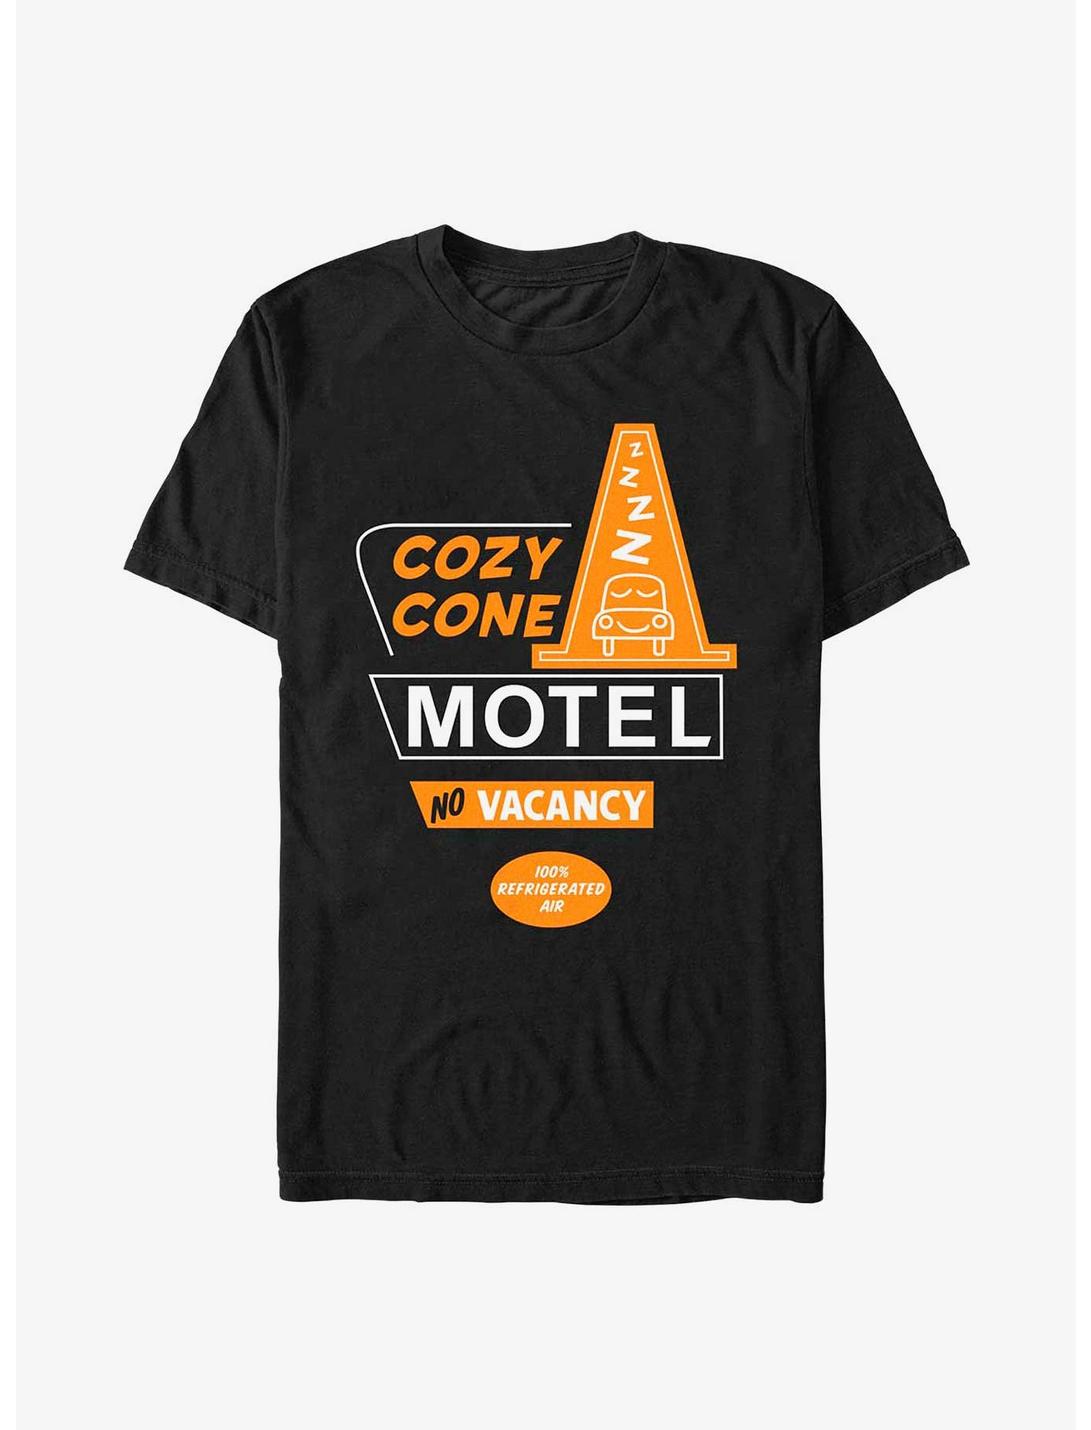 Cars Cozy Cone Motel T-Shirt, BLACK, hi-res